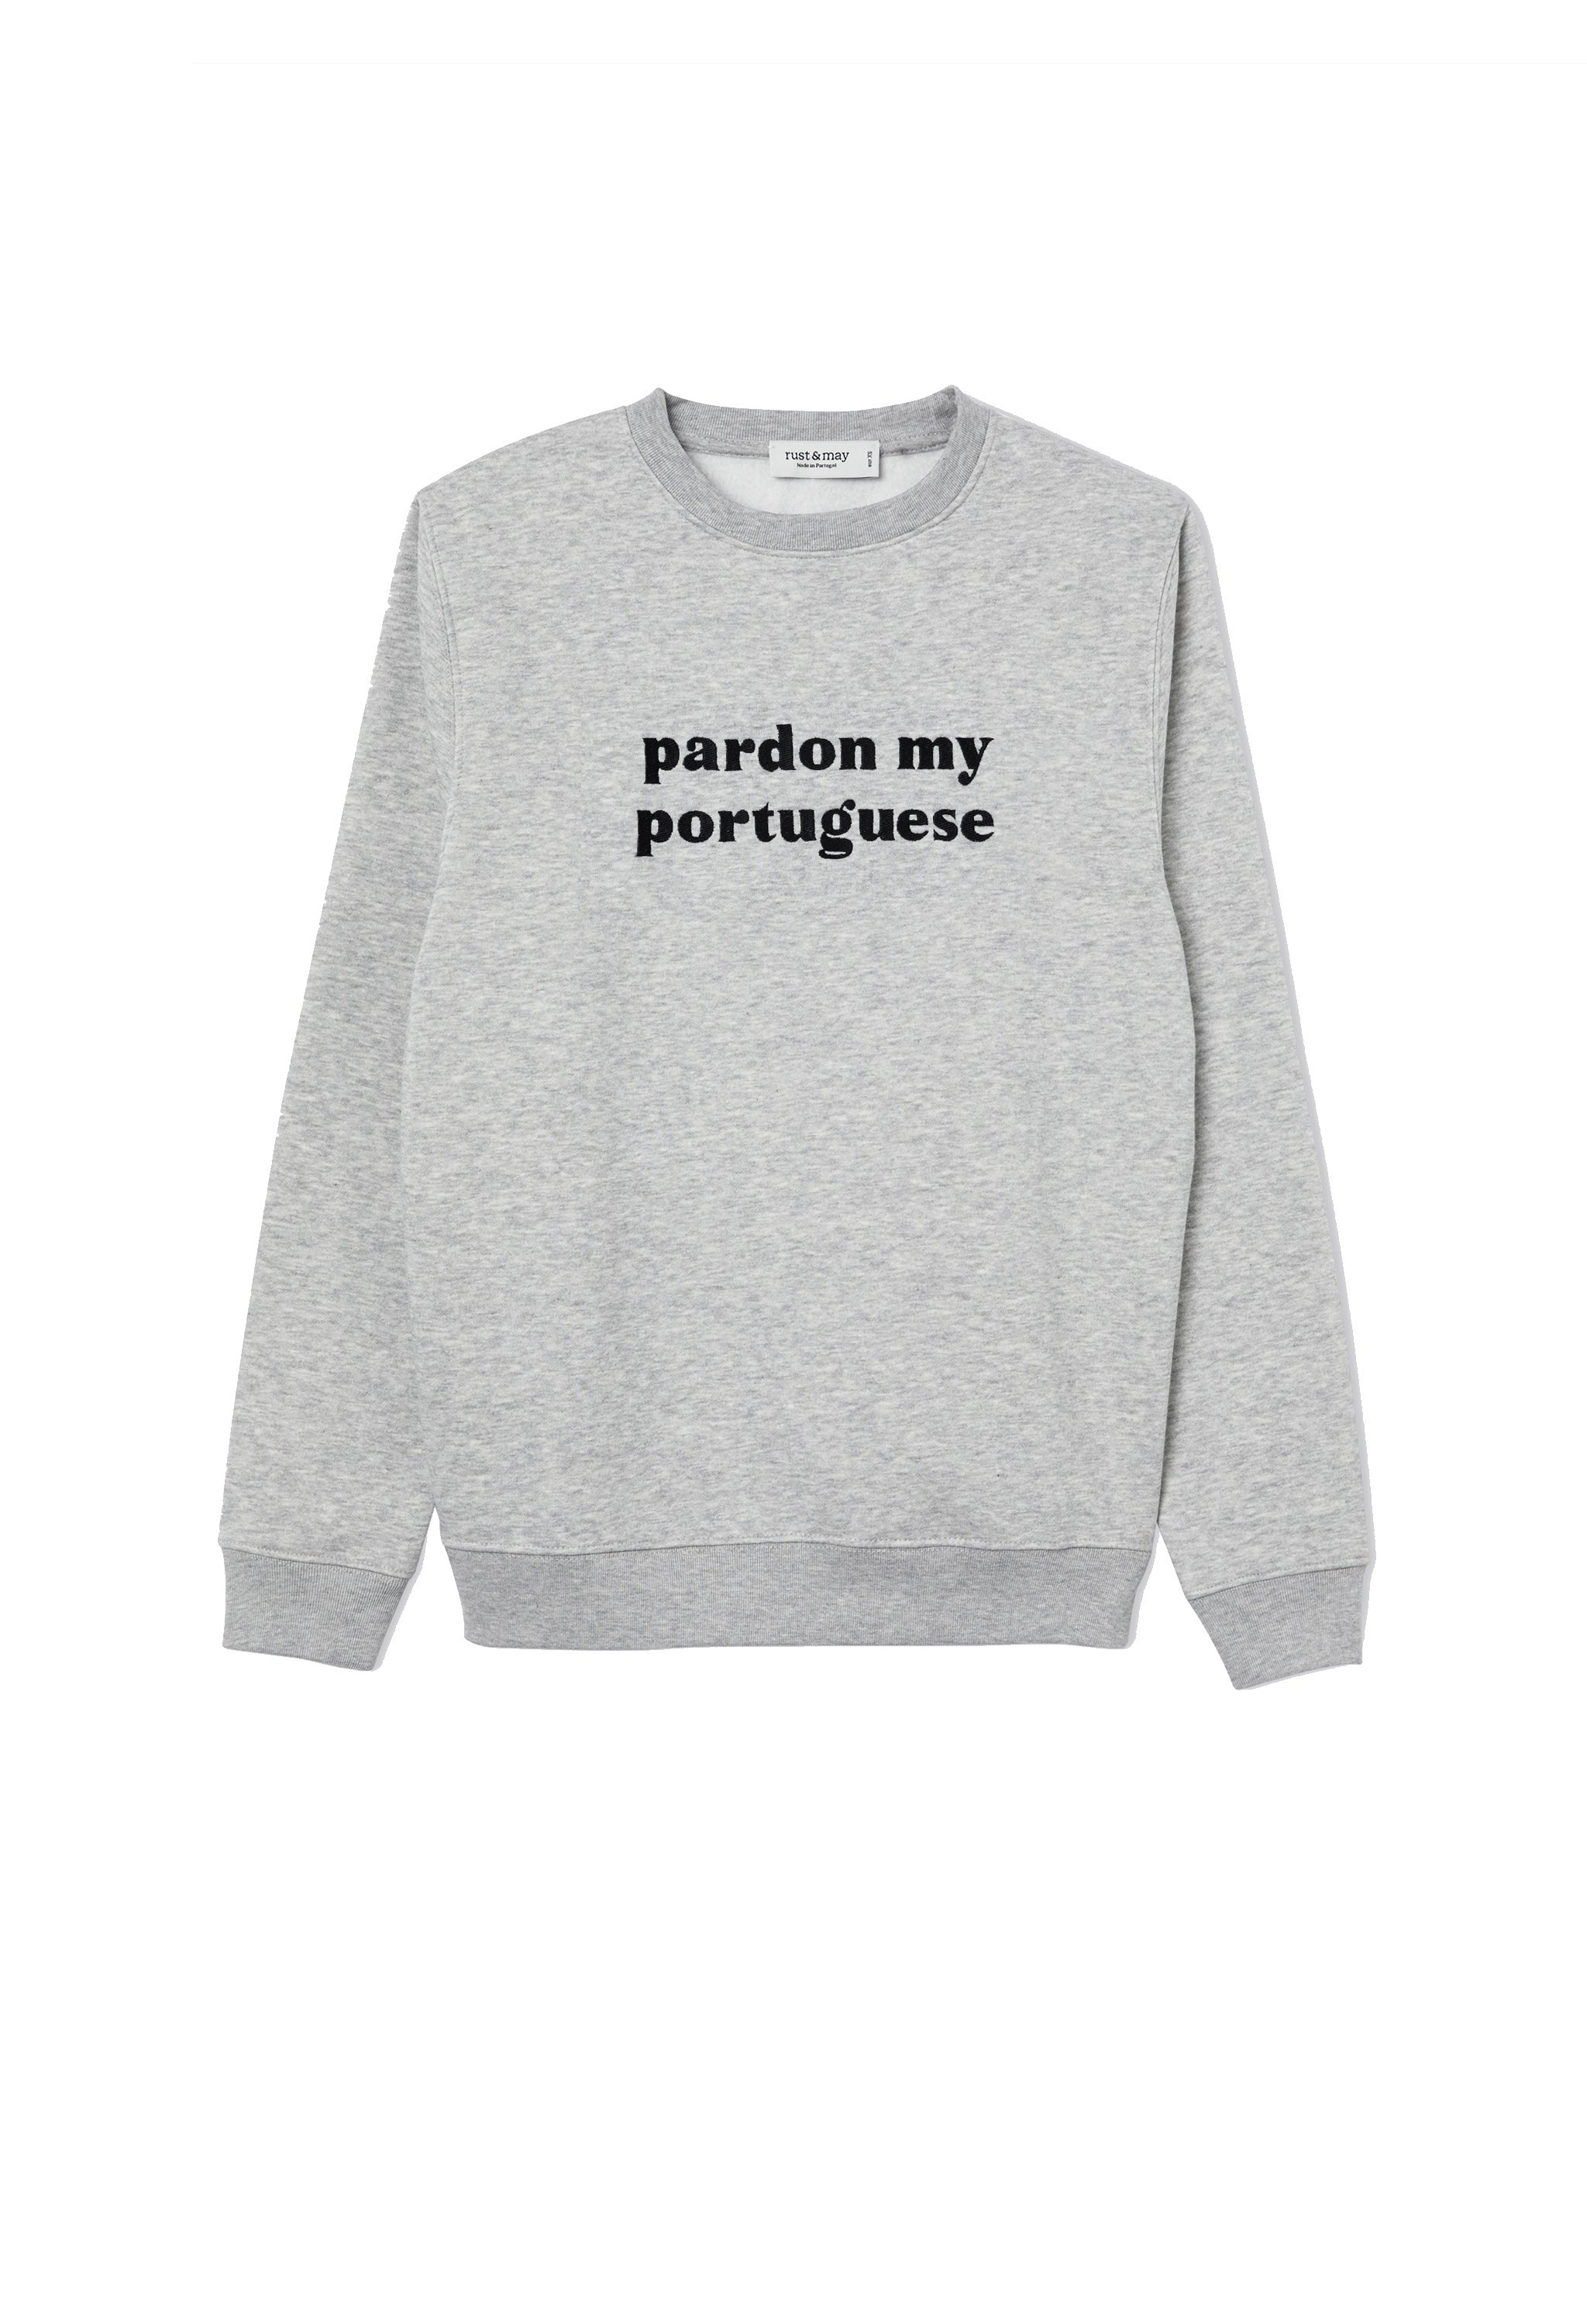 Pardon my Portuguese Sweatshirt (Adults)